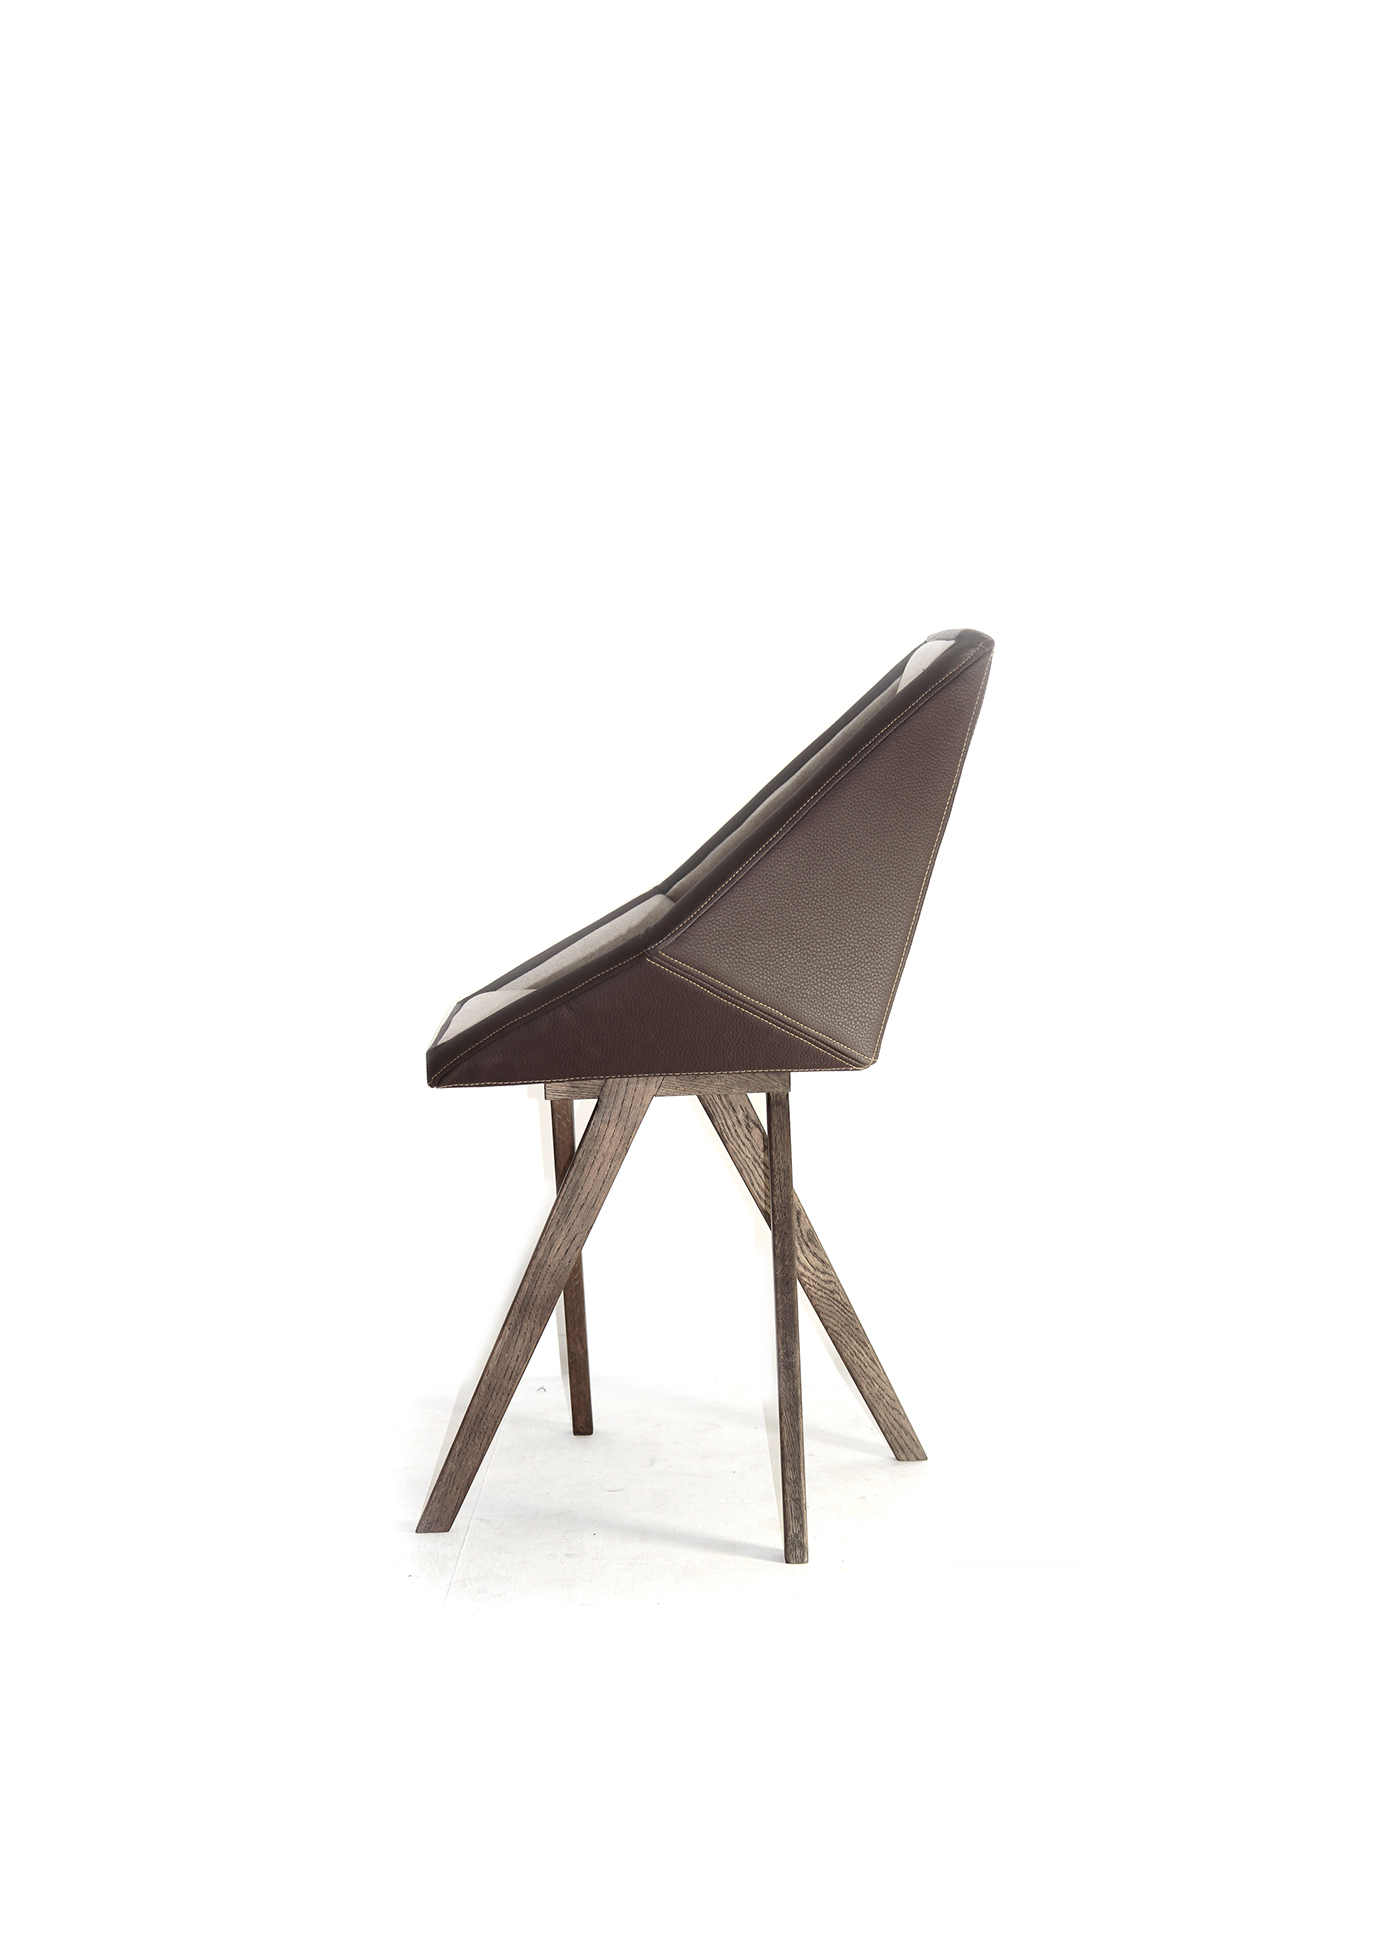 armchair chair industrial design  lobster furniture design  harms dassai Modern Design gran' gran' at